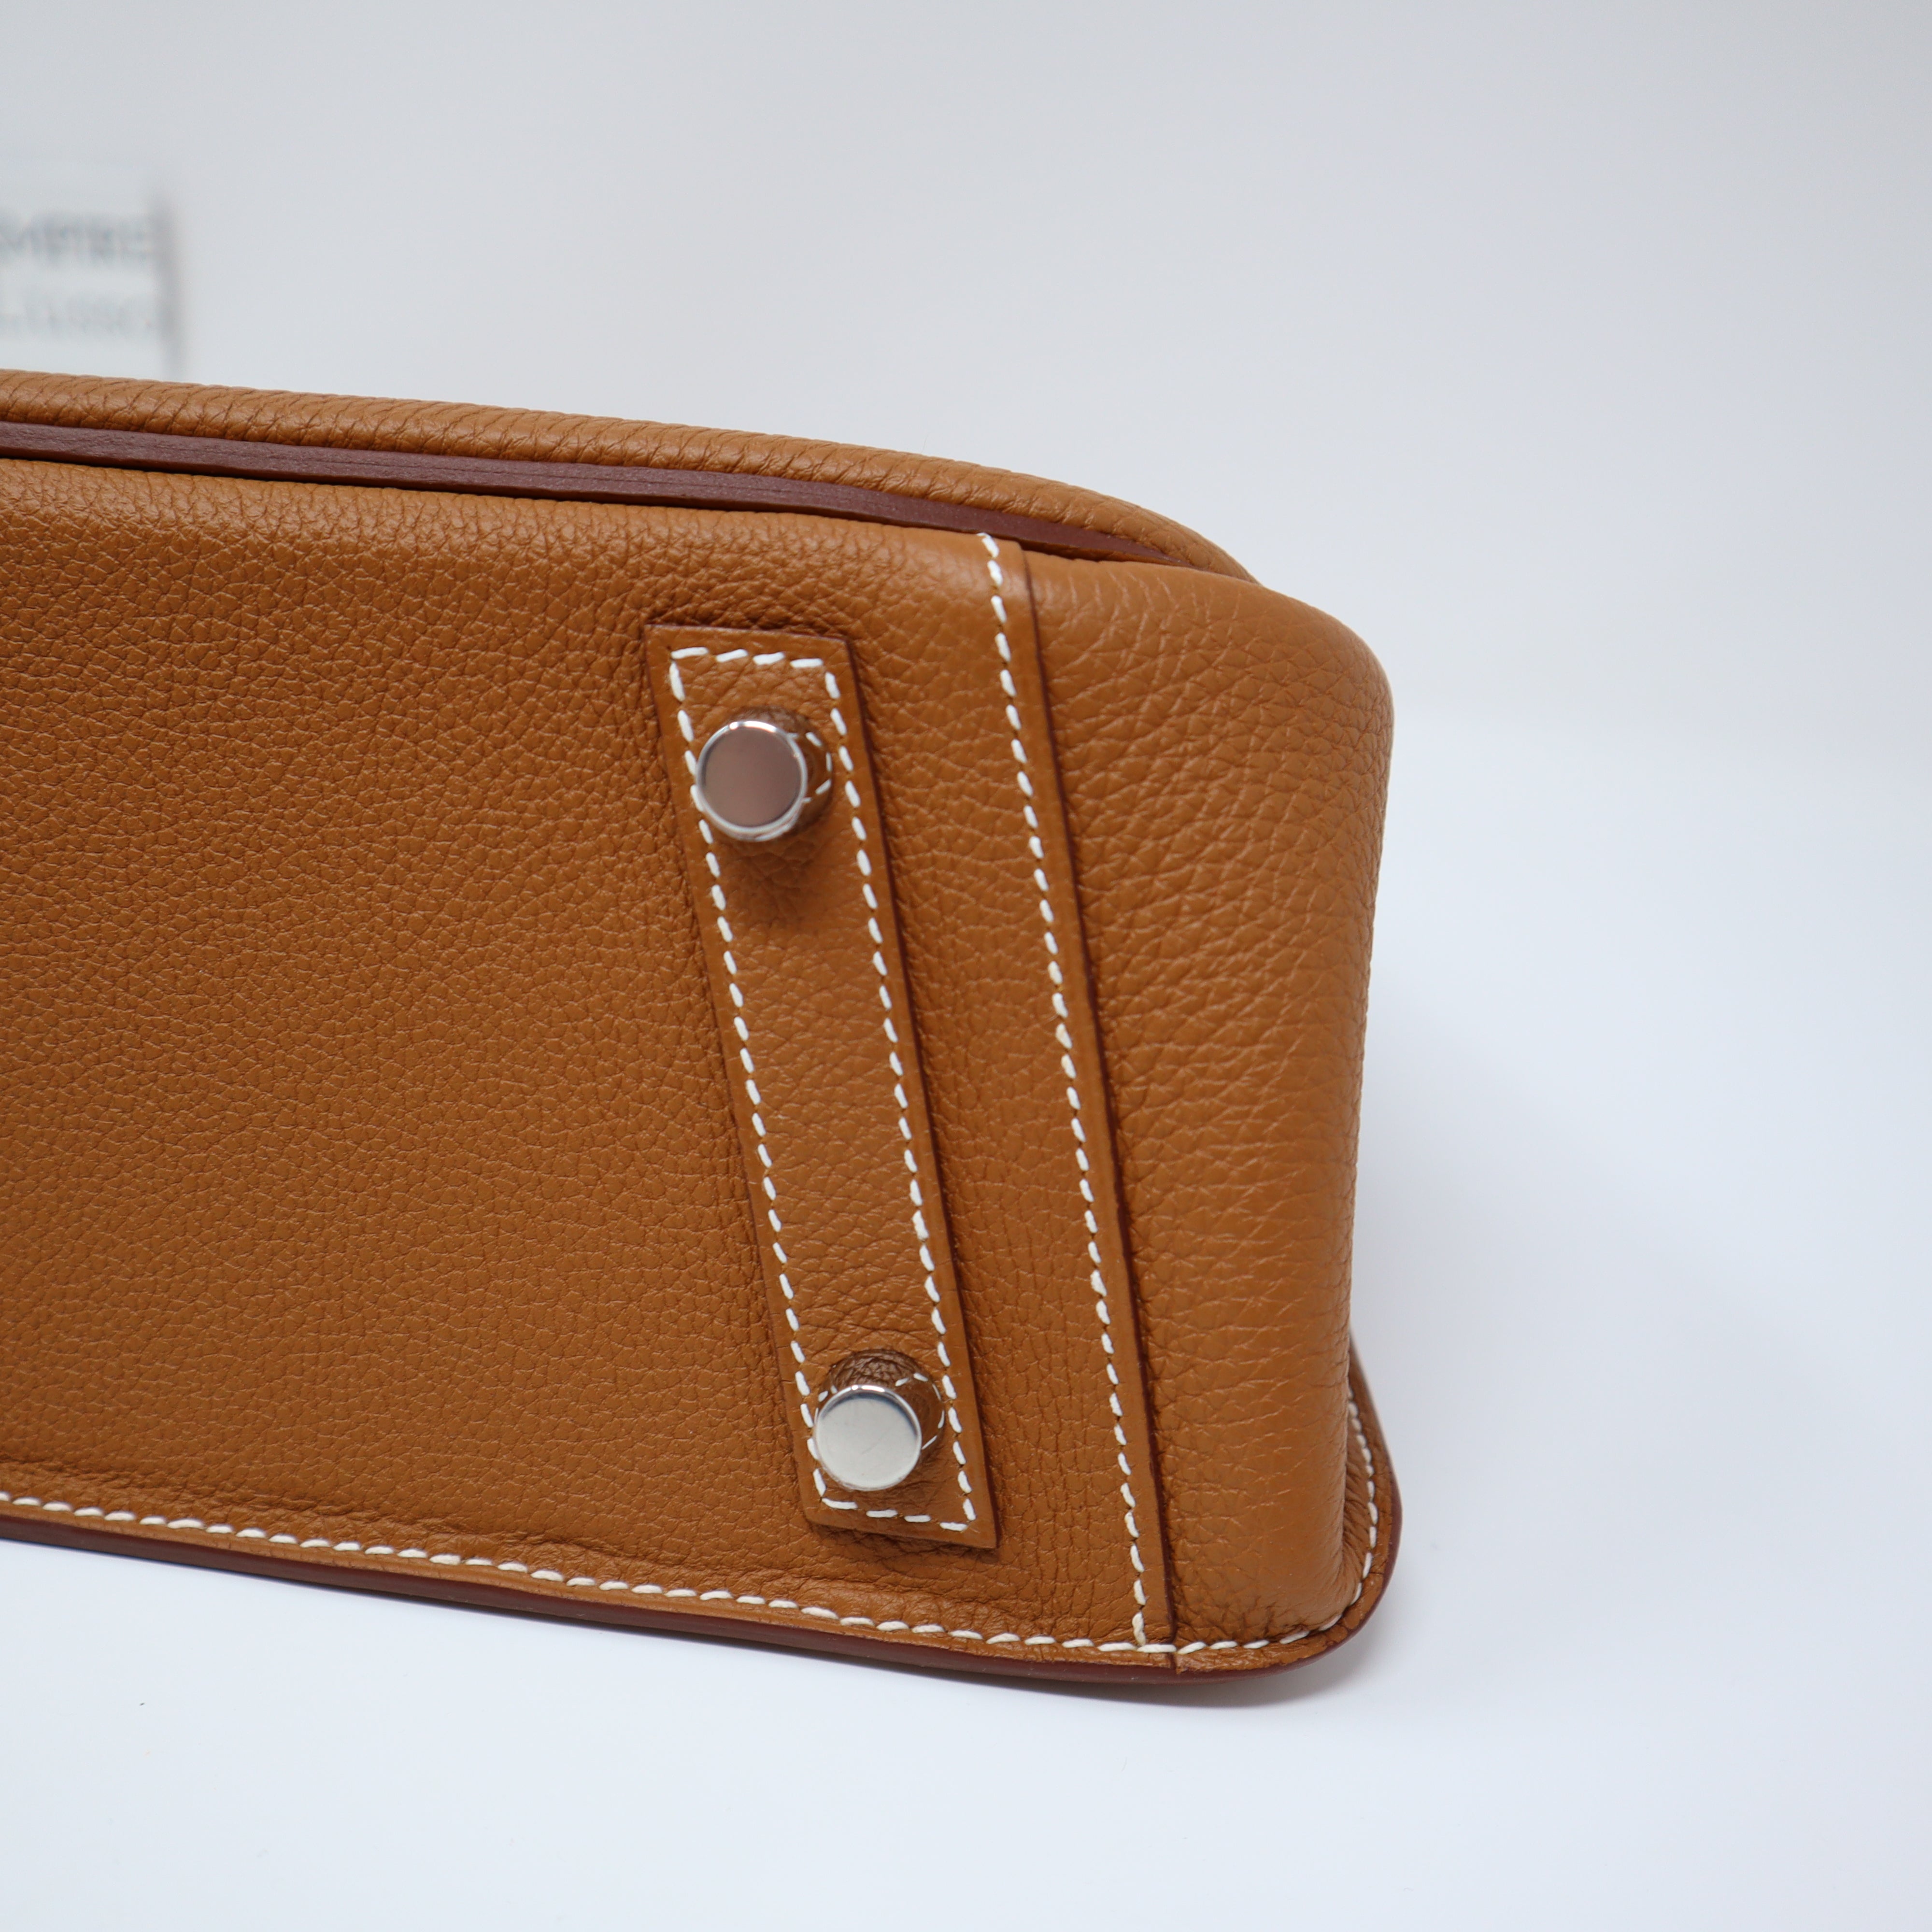 FWRD Renew Hermes Kelly 25 Handbag in Togo Leather with Palladium